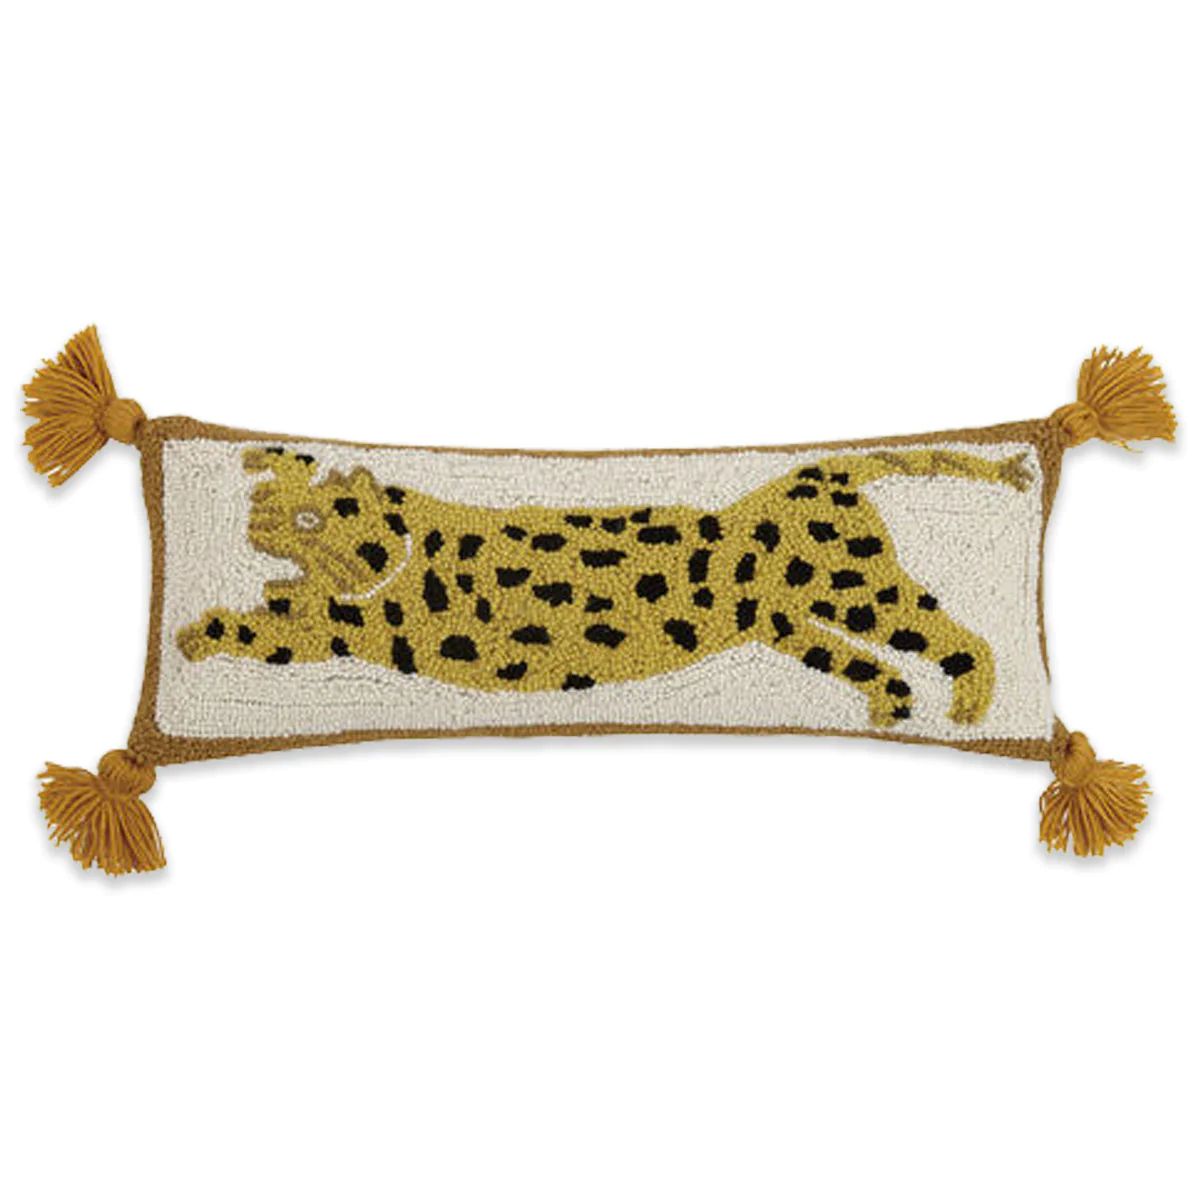 Cheetah Pom Pom Pillow | Furbish Studio